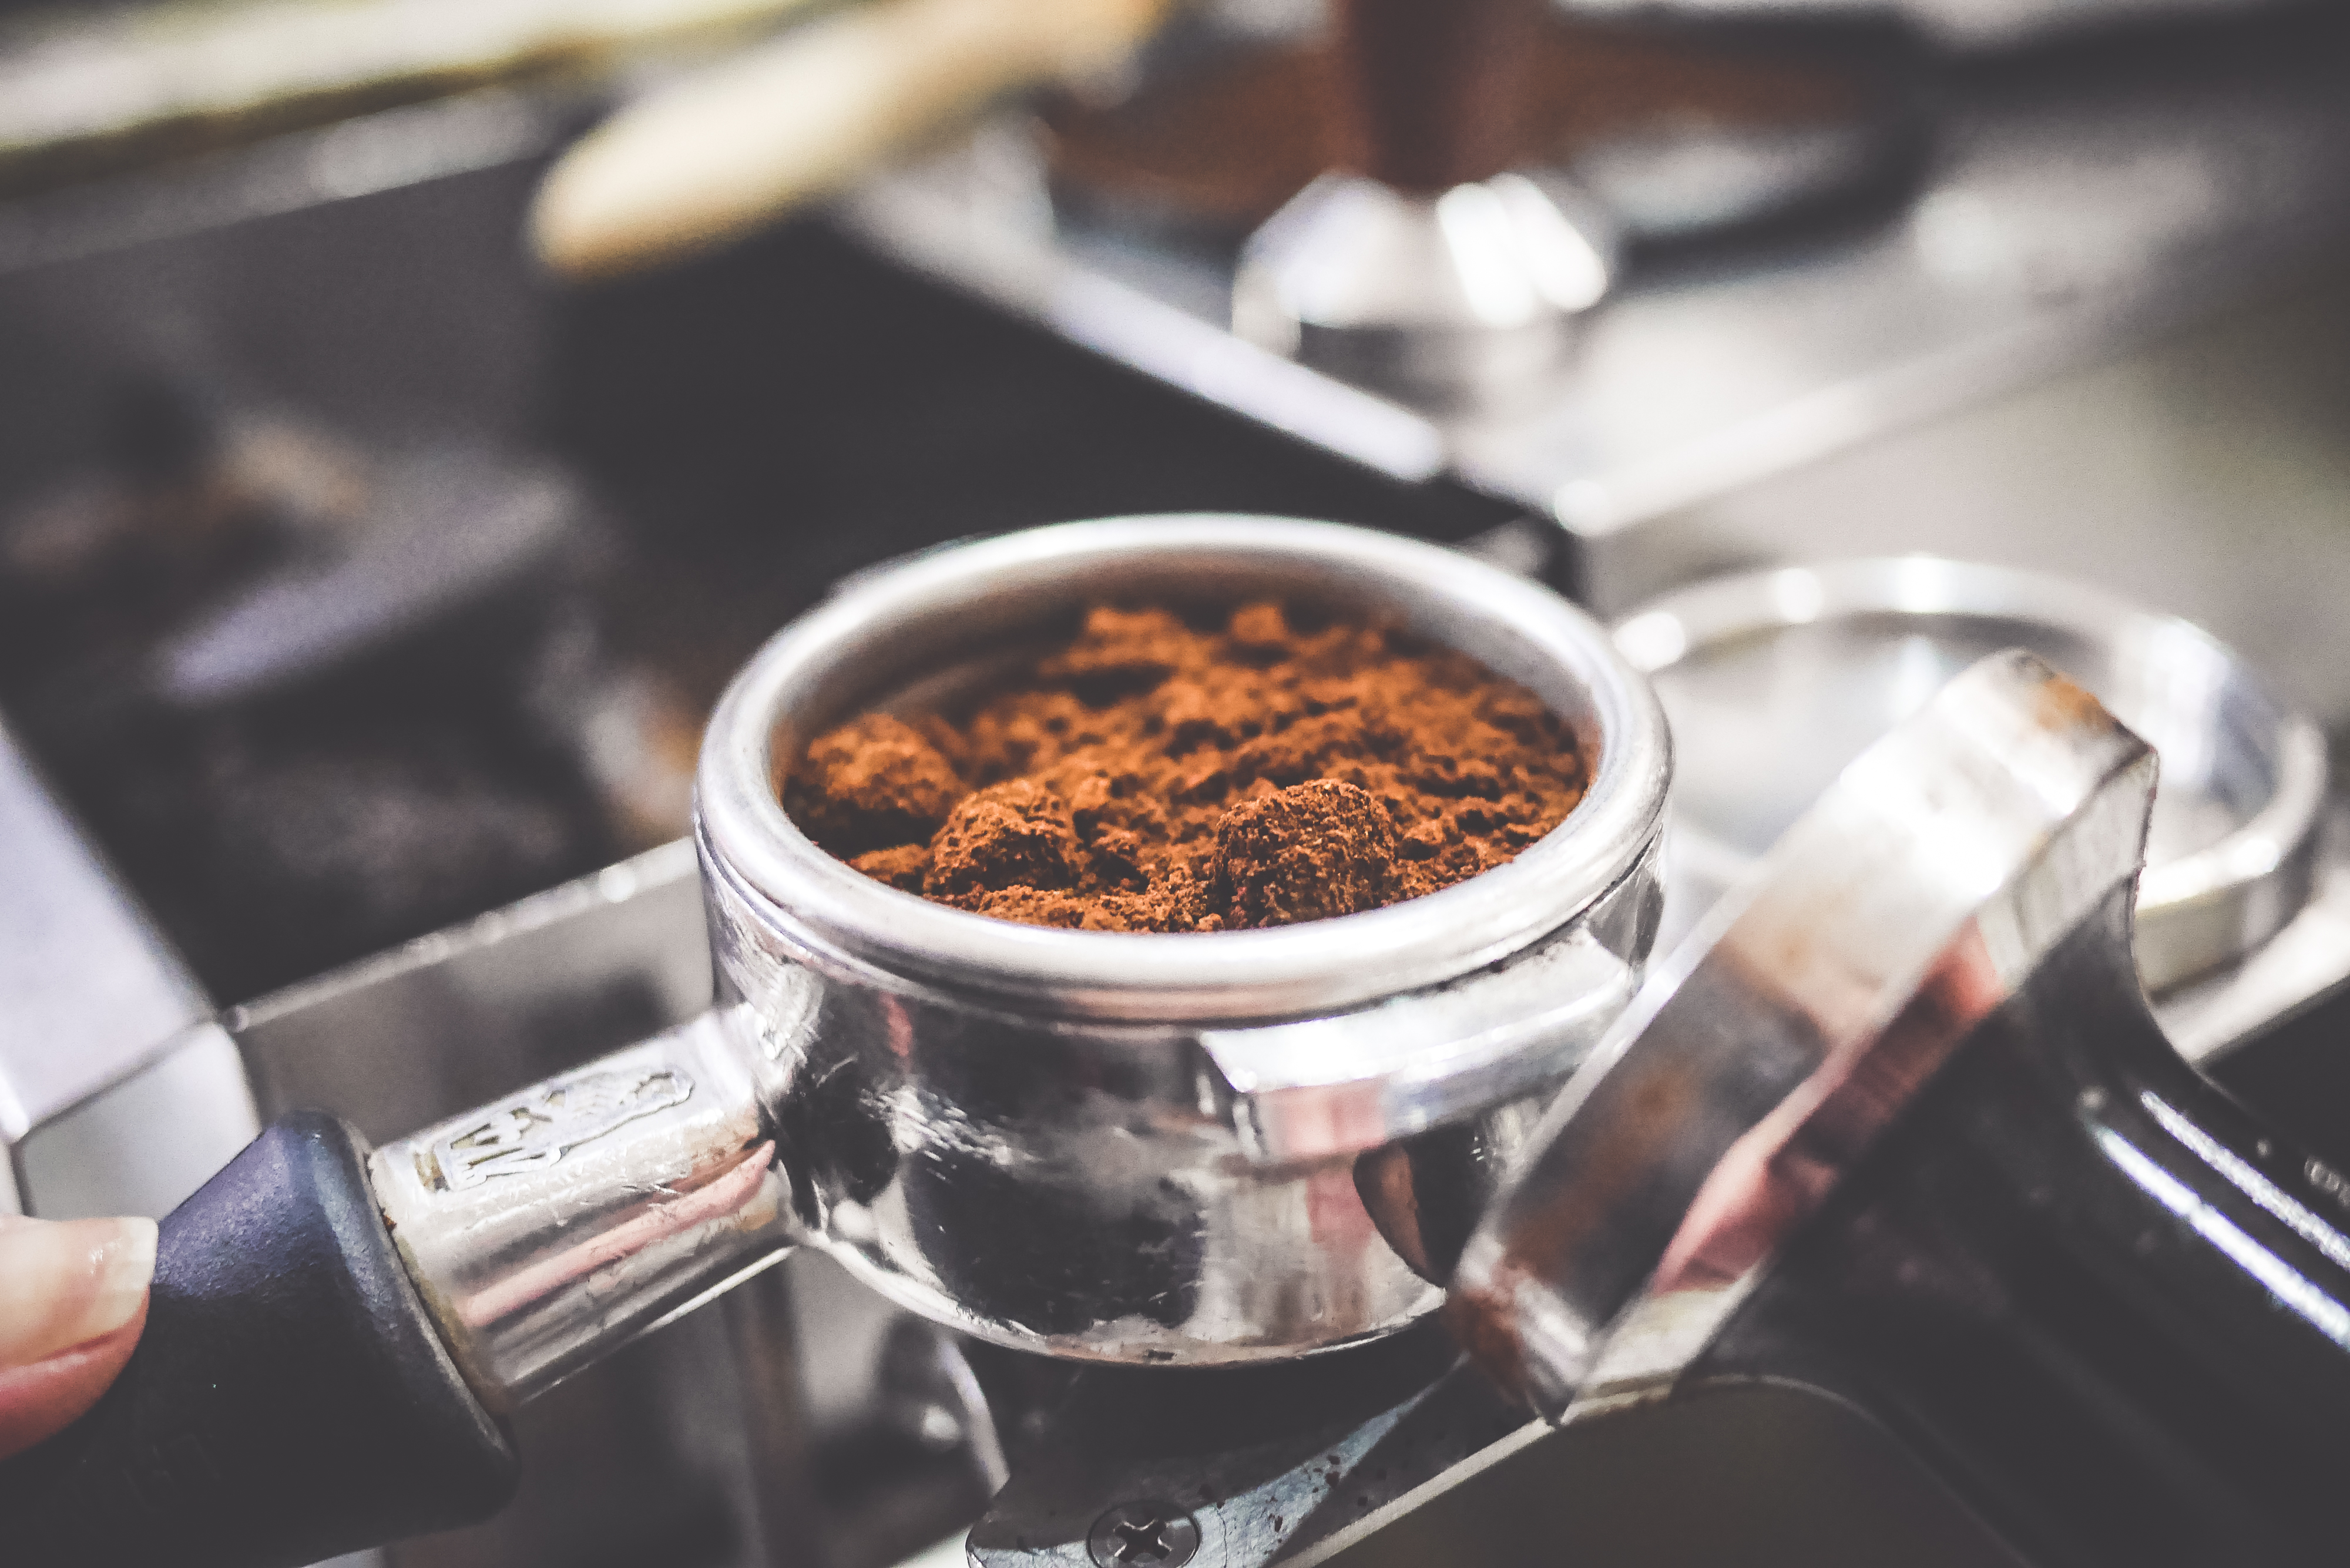 freshly-ground-coffee-from-coffee-grinder-2-picjumbo-com